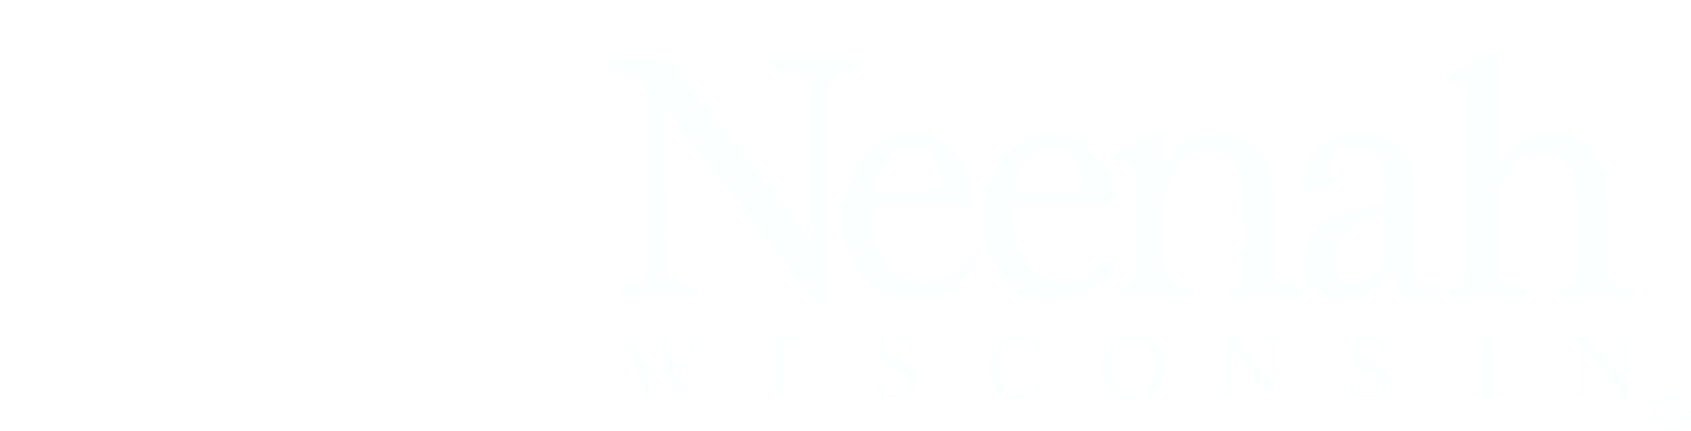 Neenah (town), Wisconsin - Wikipedia